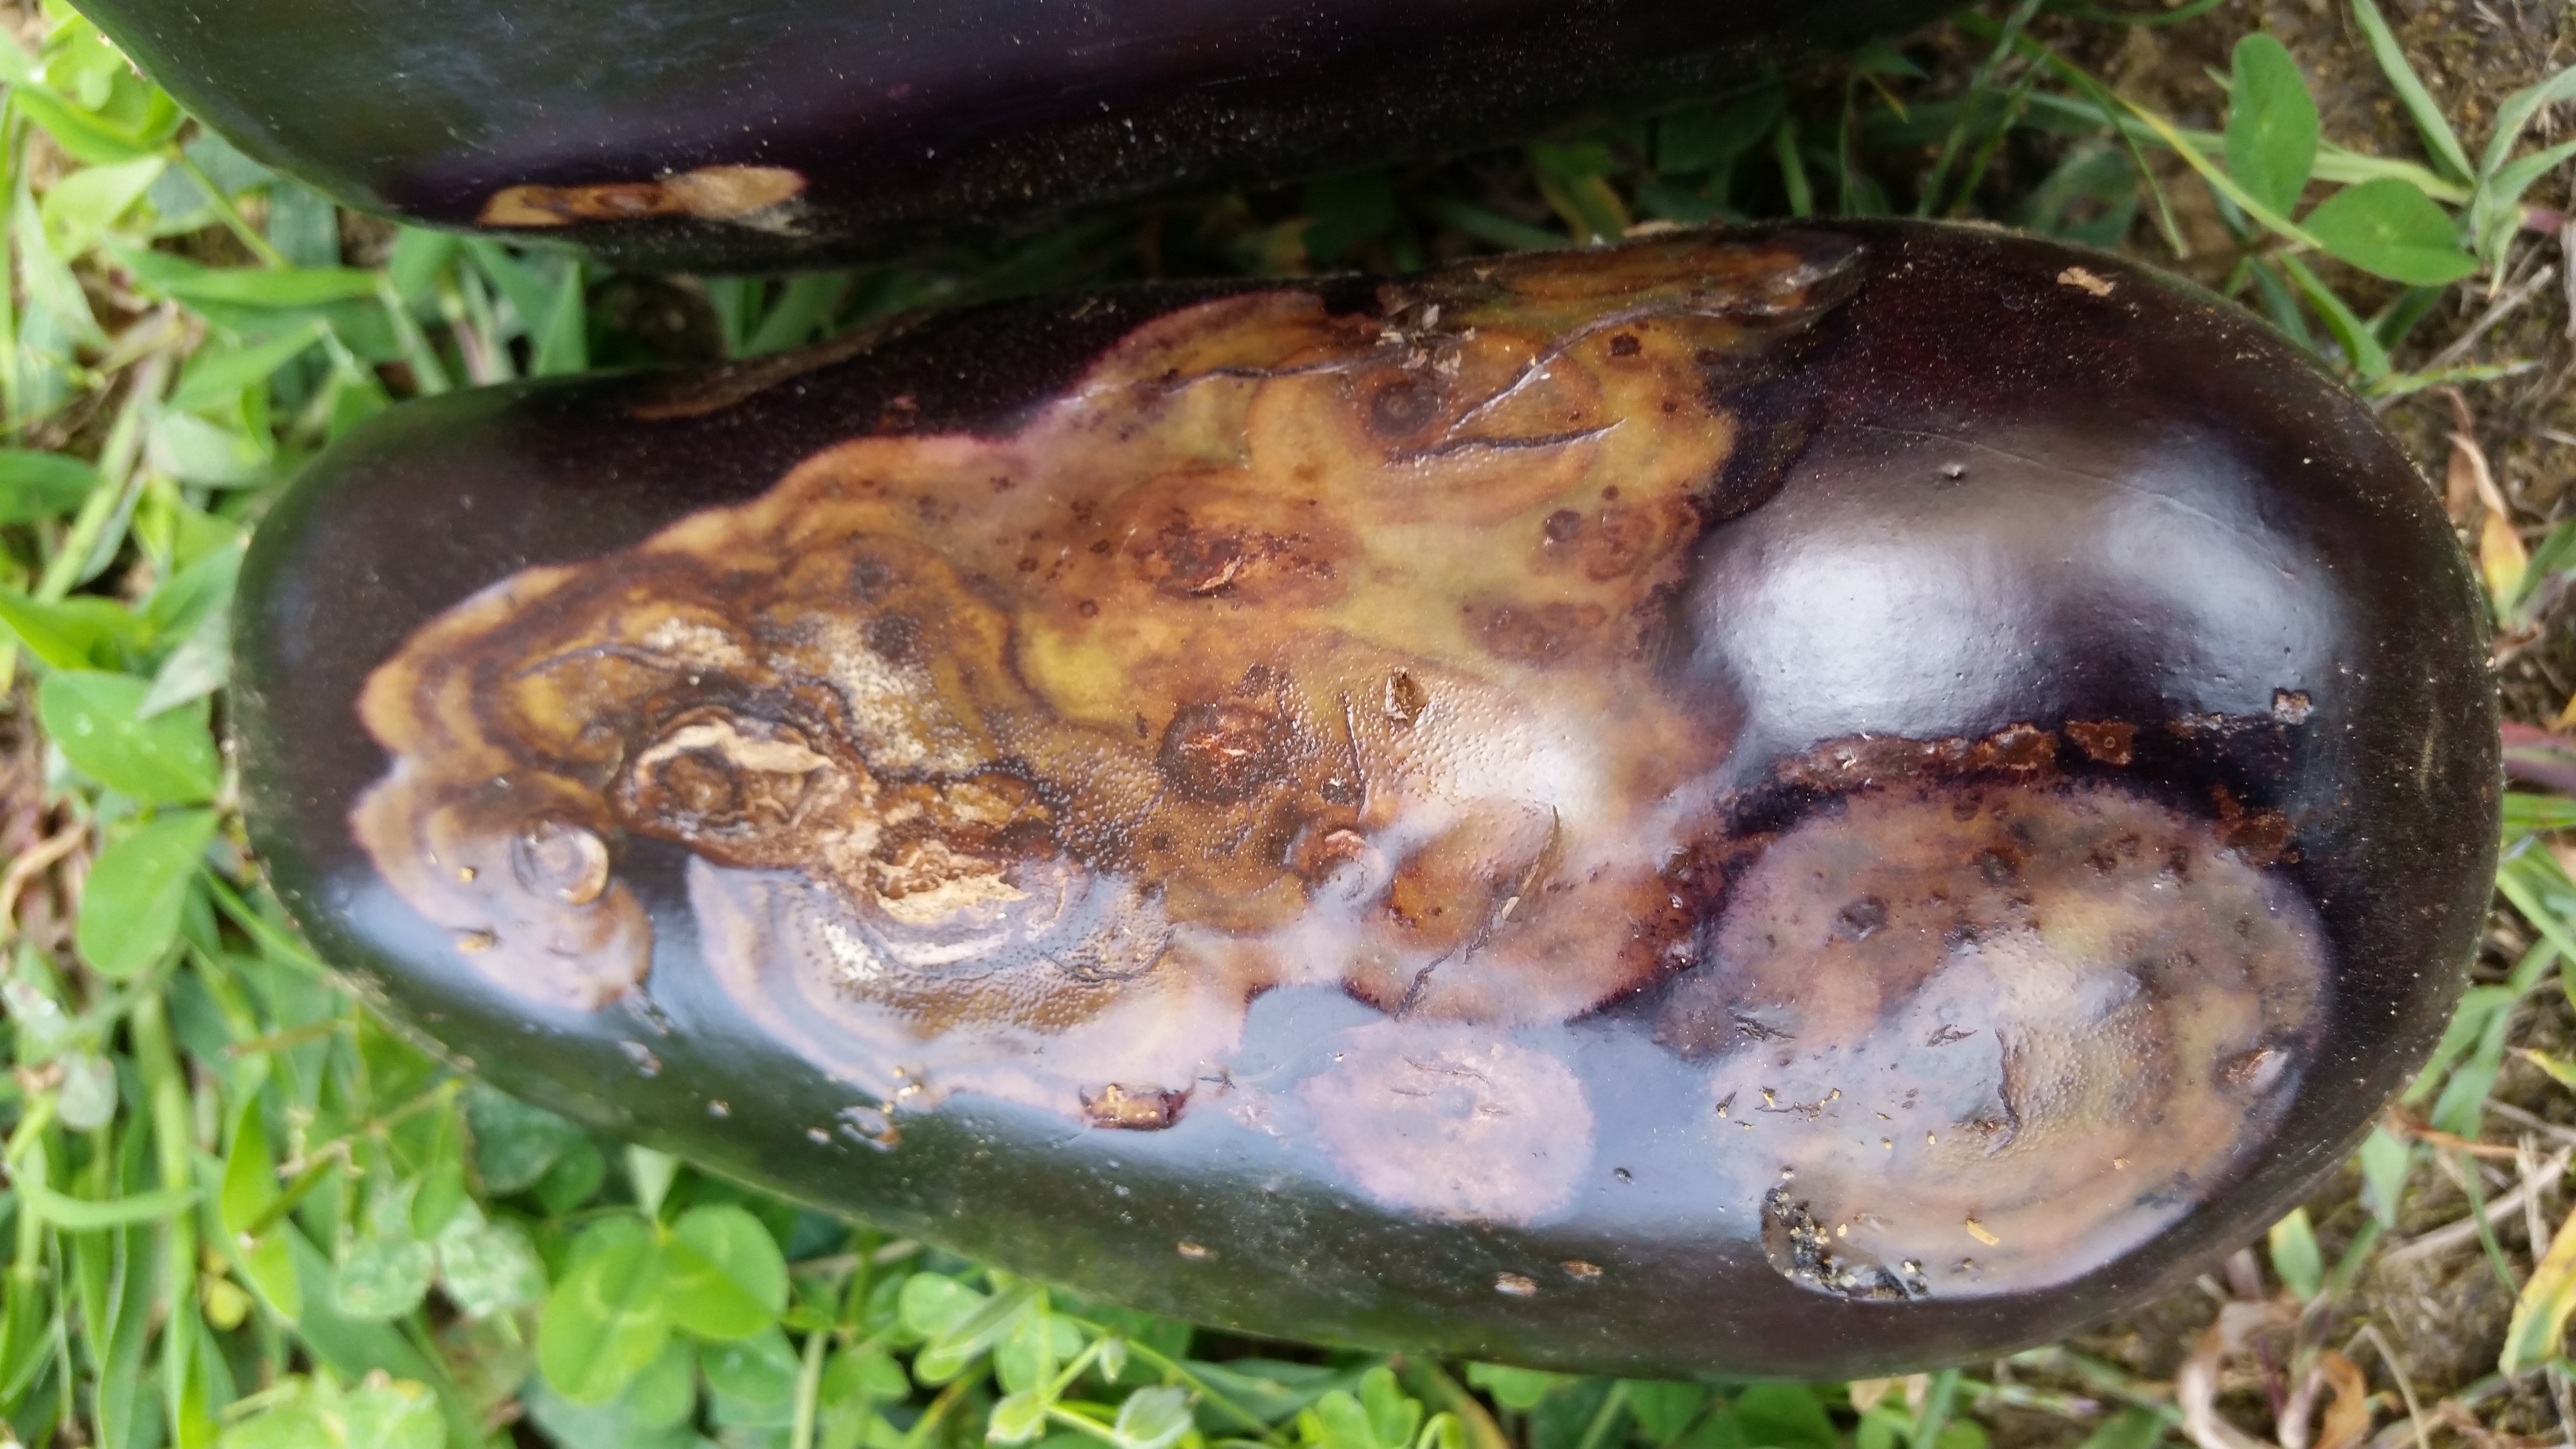 Phomopsis fruit rot in eggplant